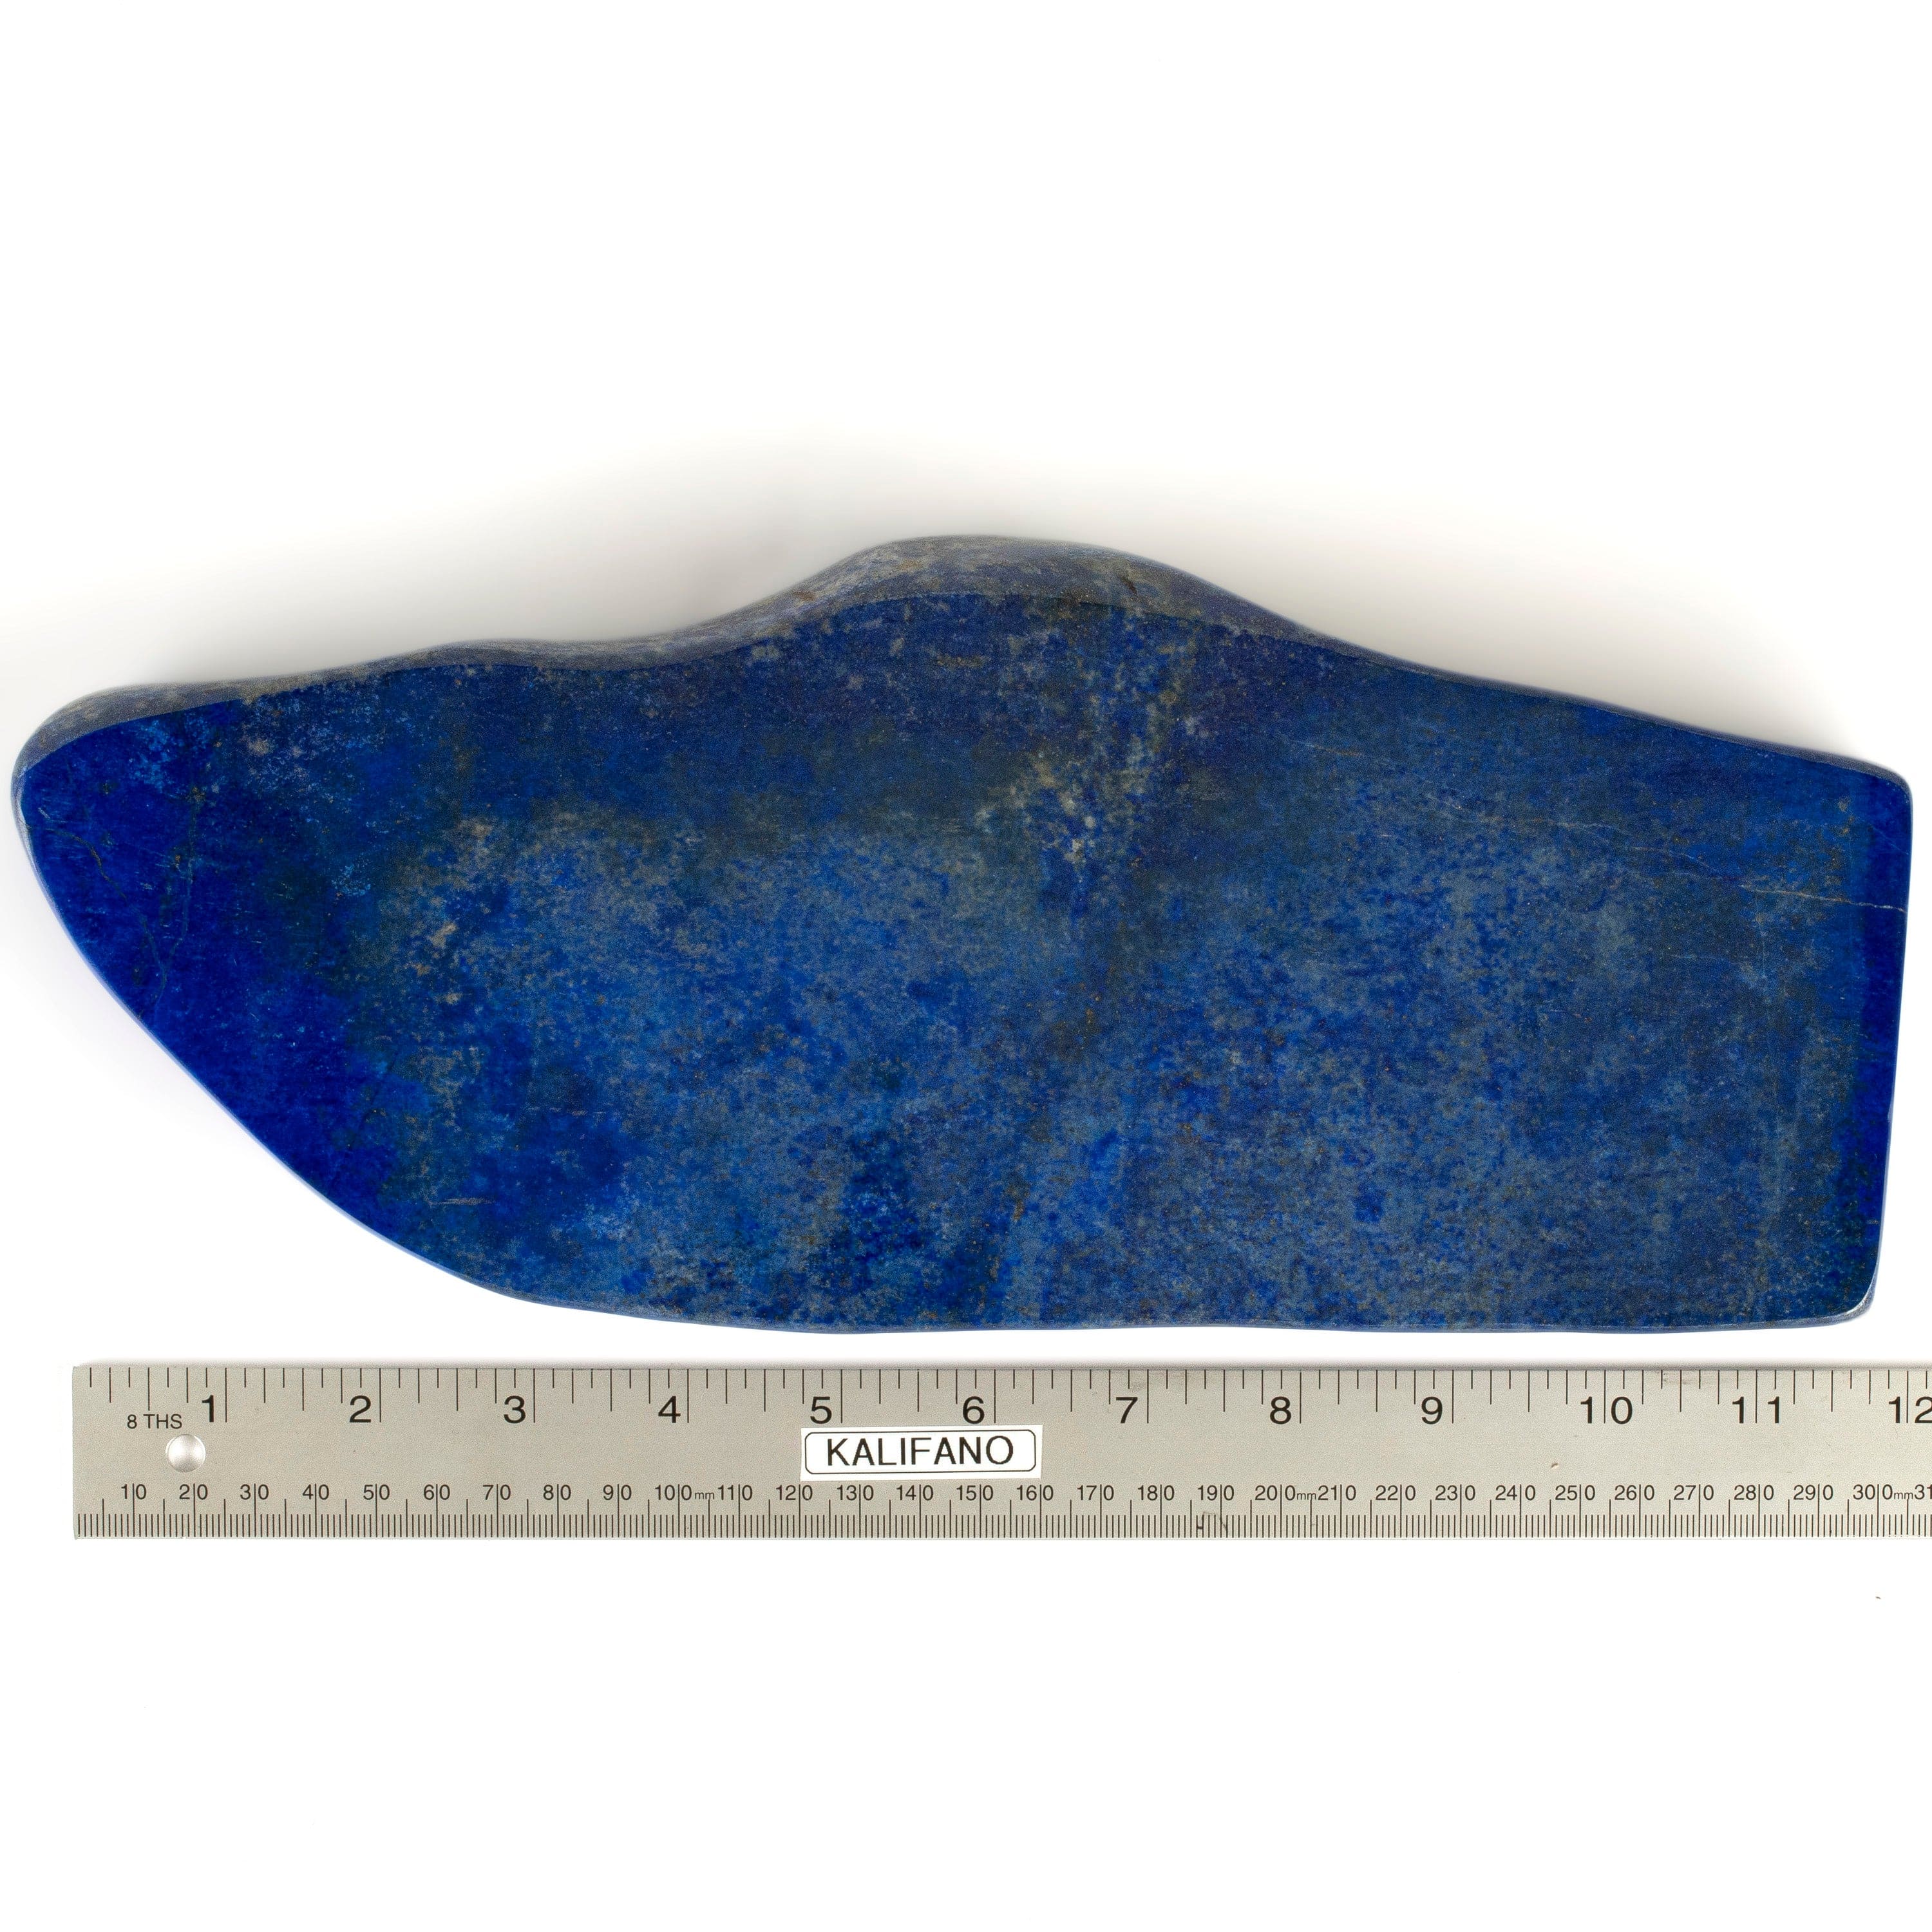 Kalifano Lapis Lapis Lazuli Freeform from Afghanistan - 12" / 2,180 grams LP2200.001